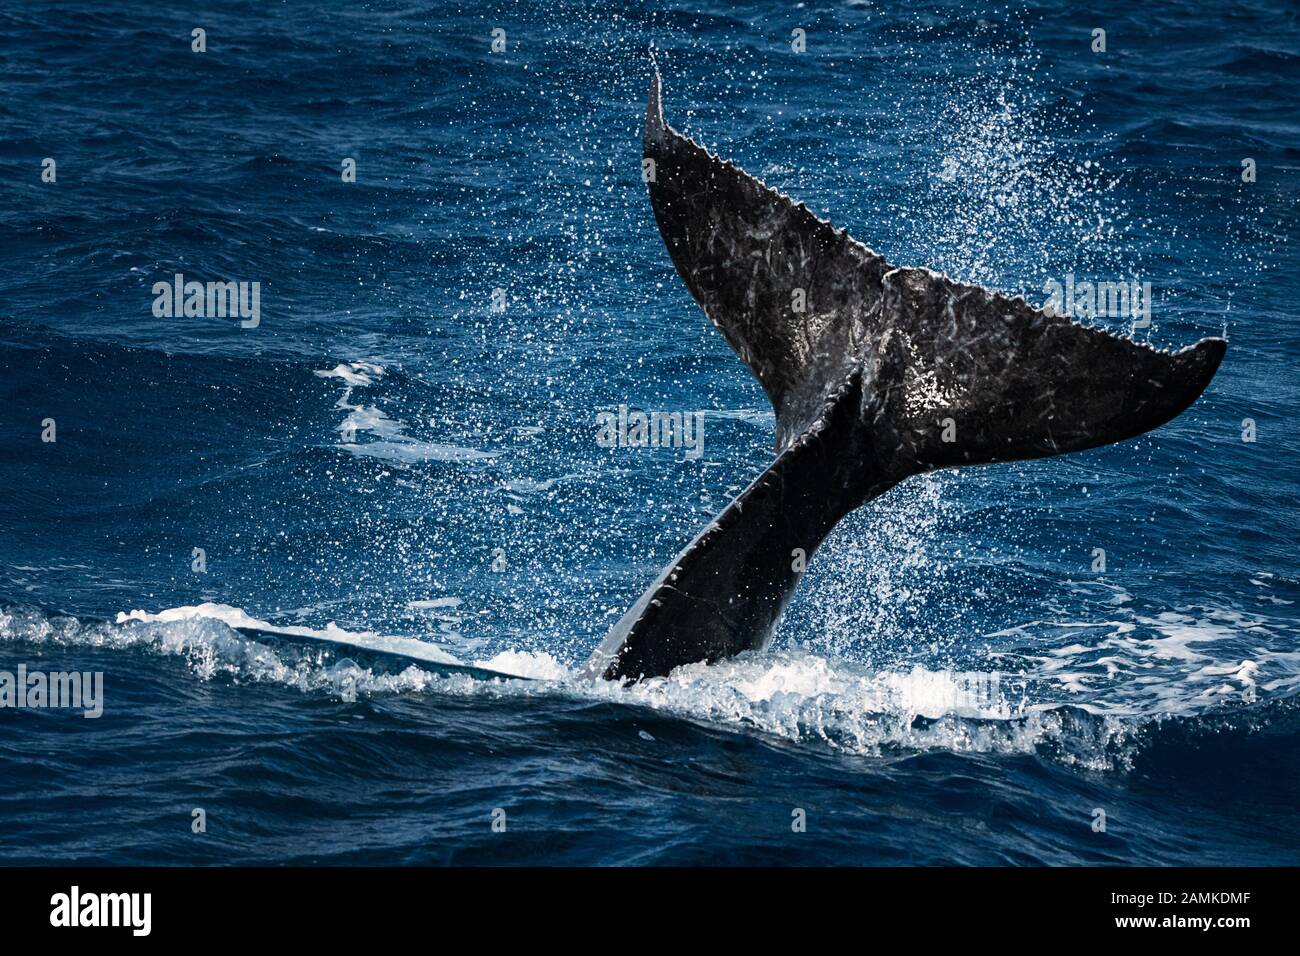 Giant fluke of a Humpback Whale. Stock Photo